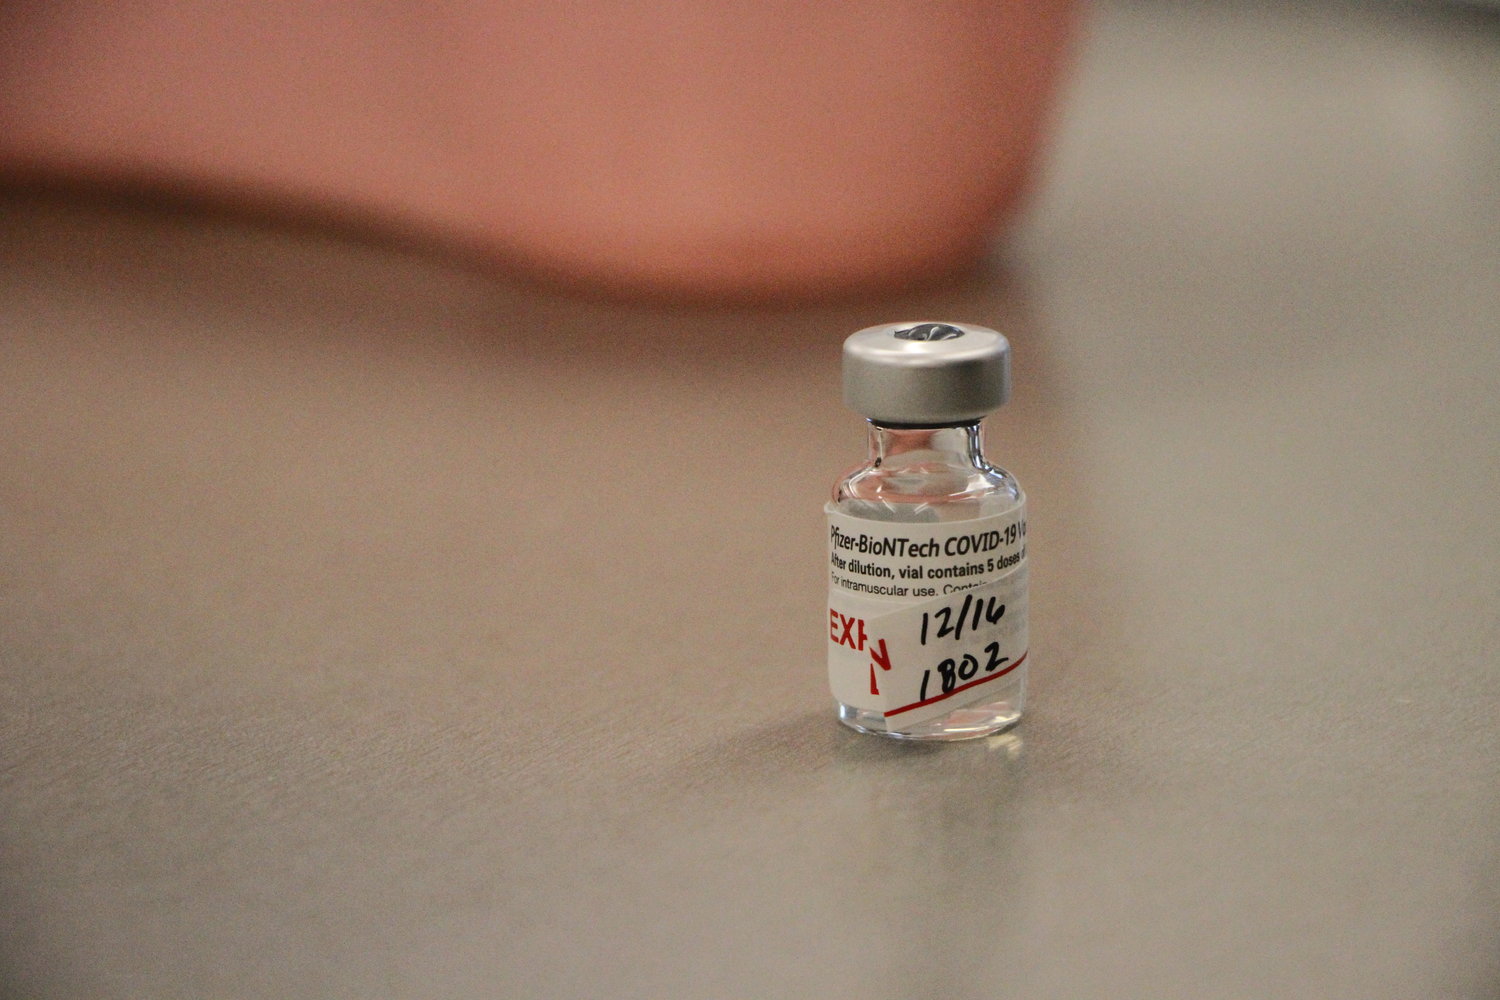 The Pfizer-BioNTech COVID-19 vaccine.